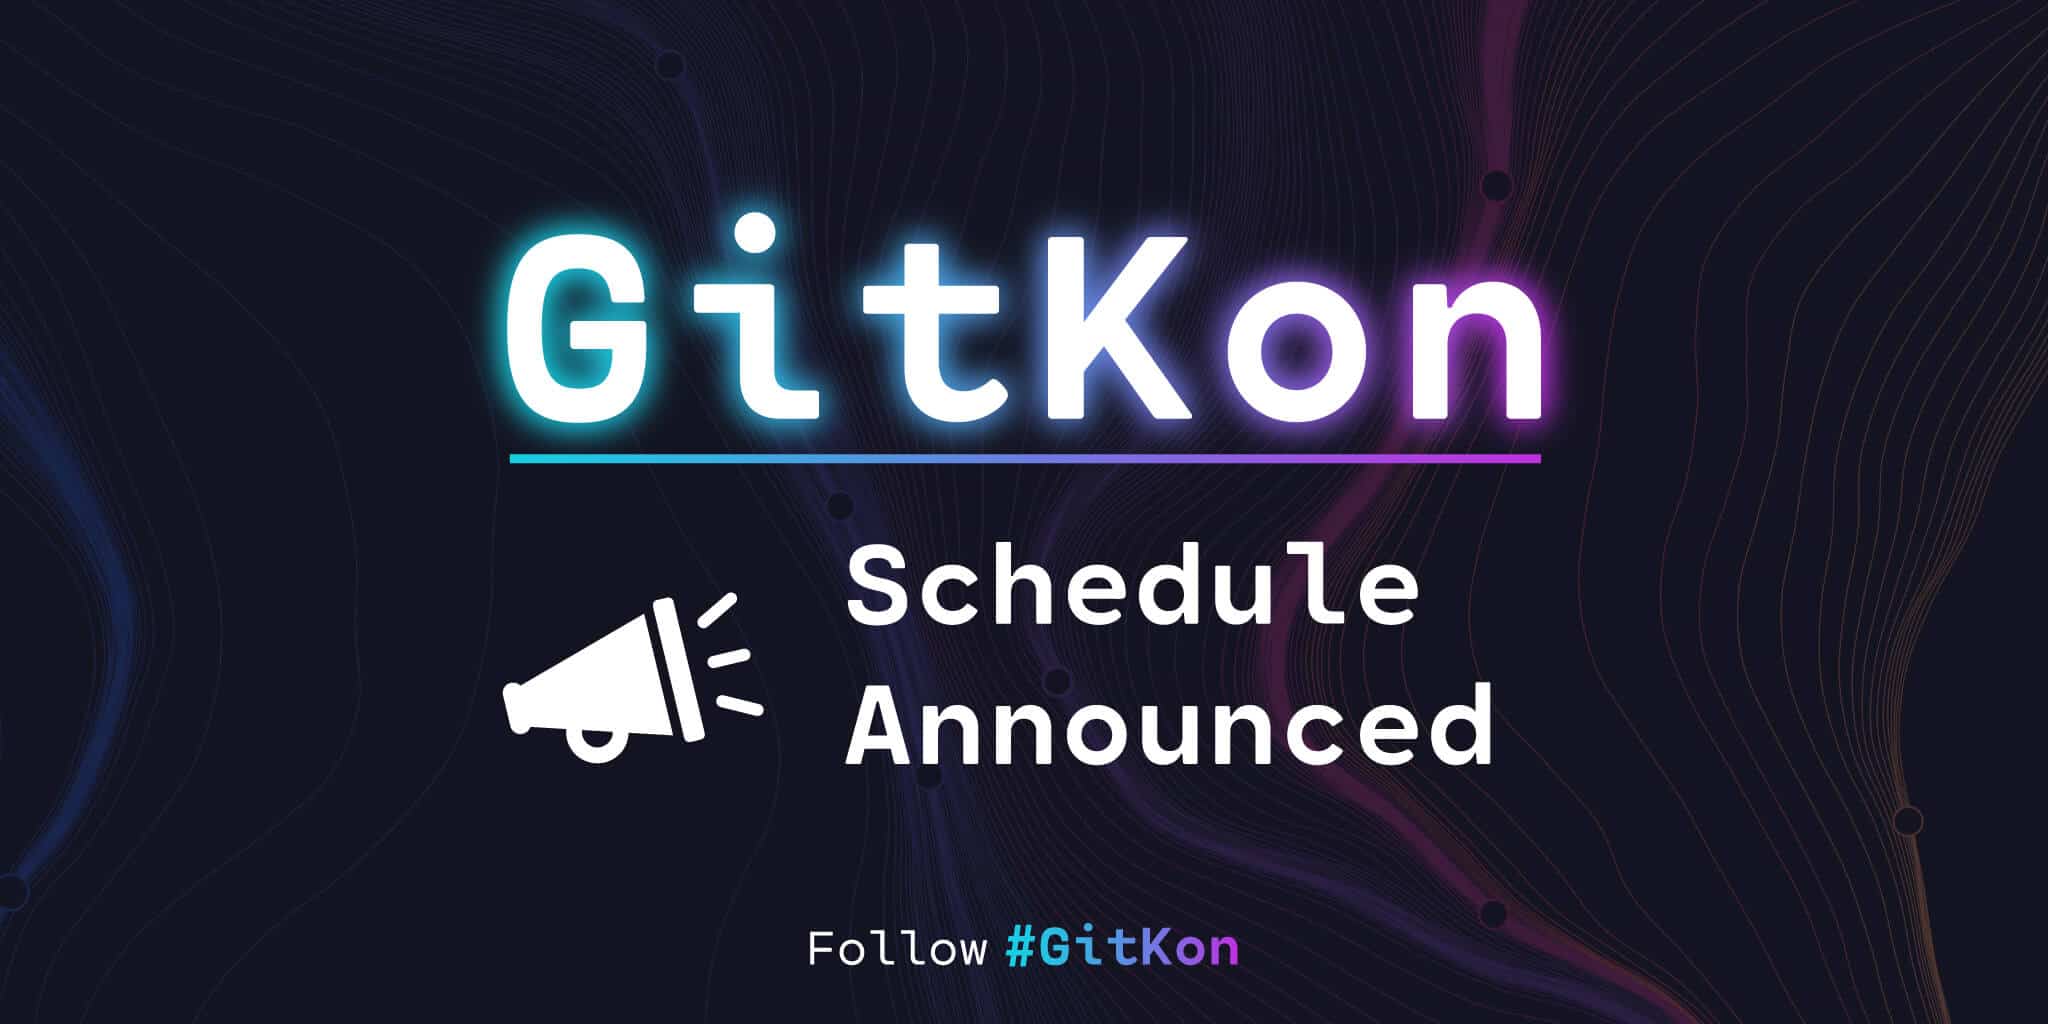 GitKon Schedule Announced